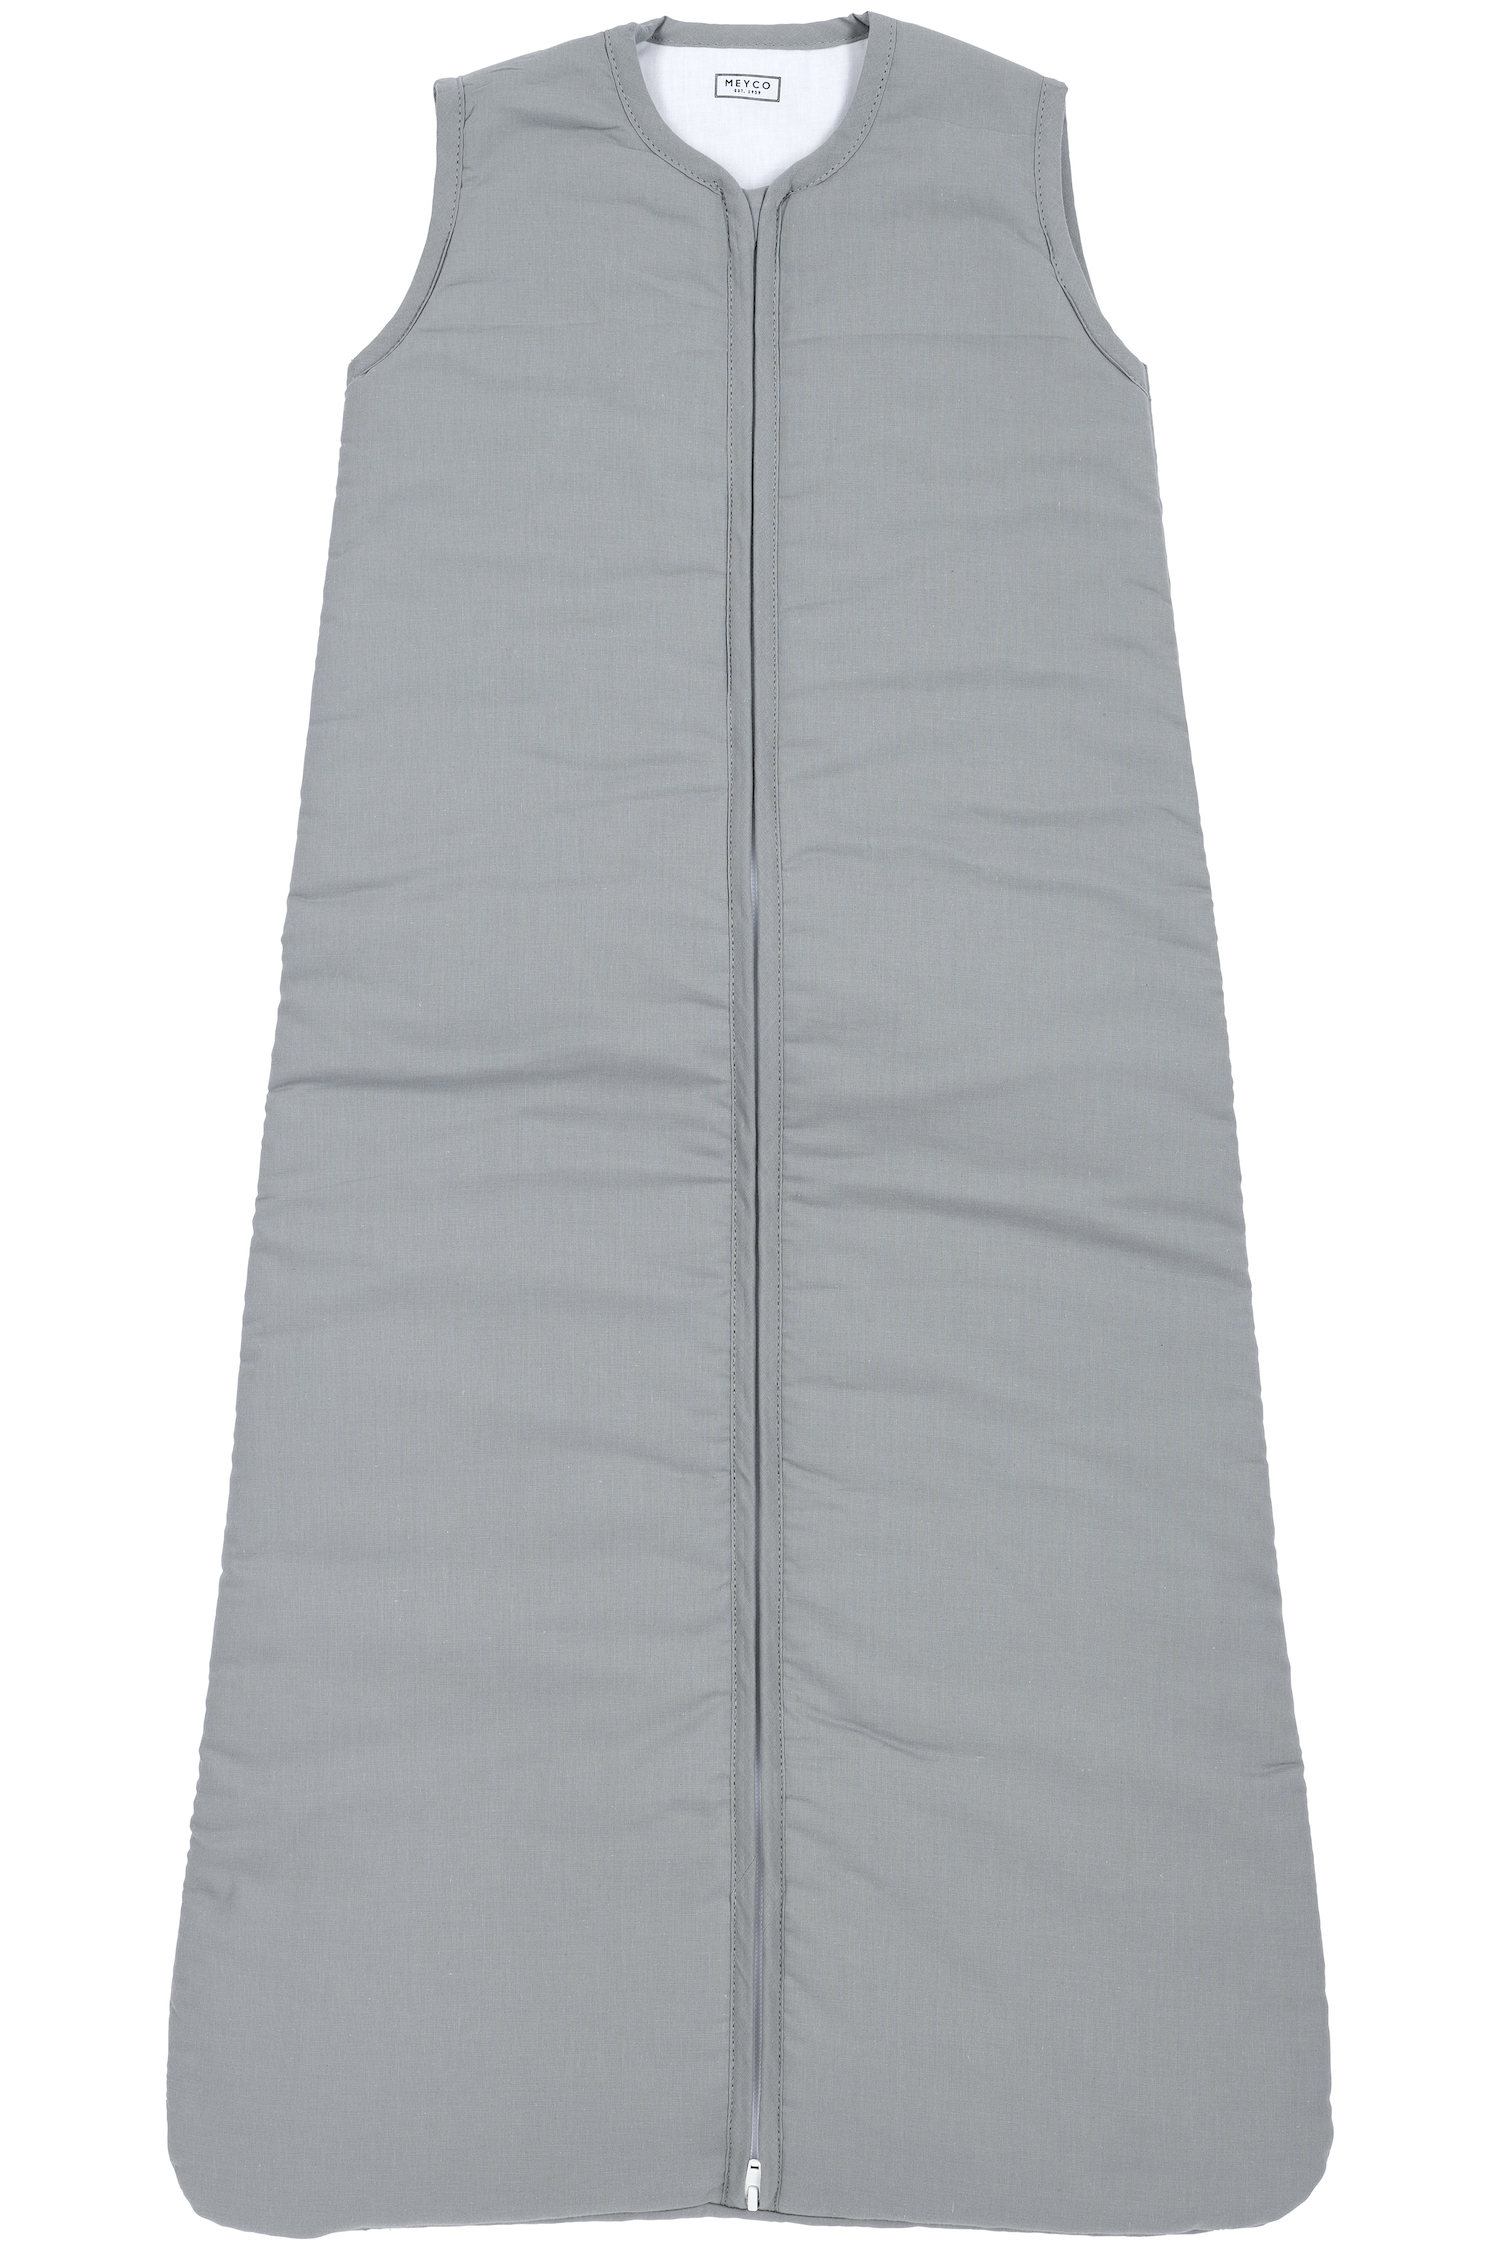 Schlafsack Gefüttert Uni - grey - 110cm